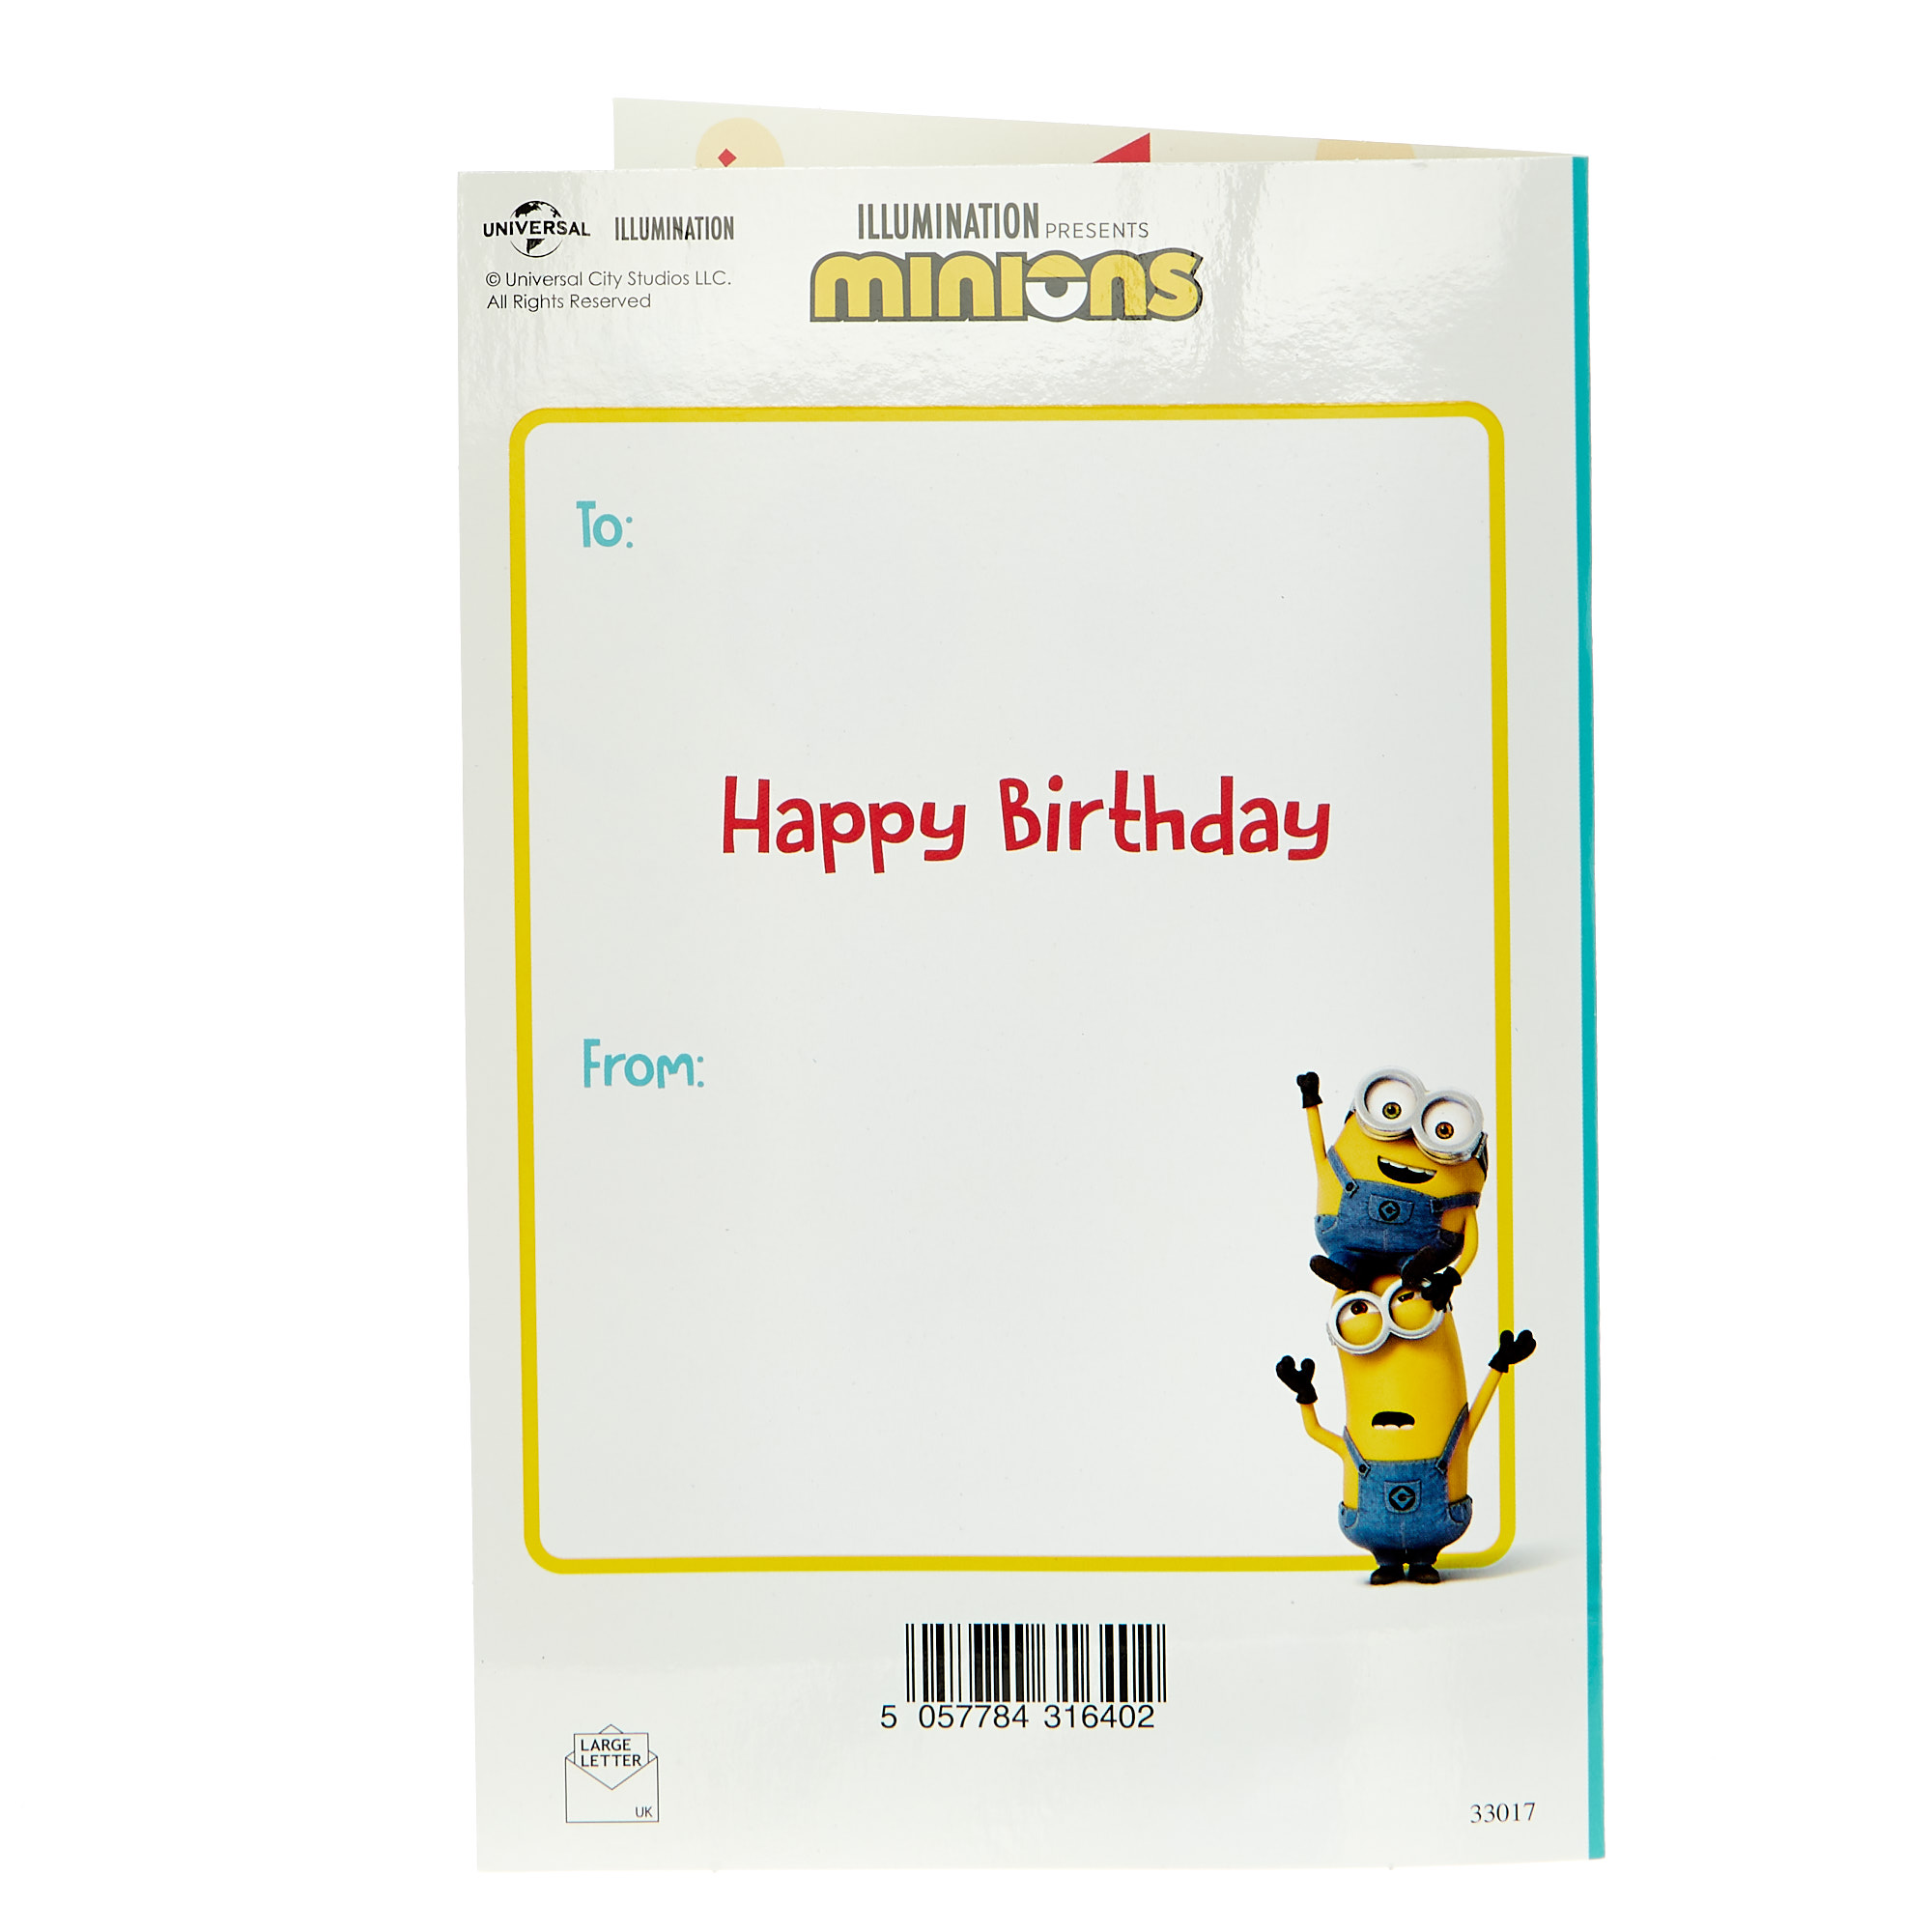 Minions Pop-Up Birthday Card